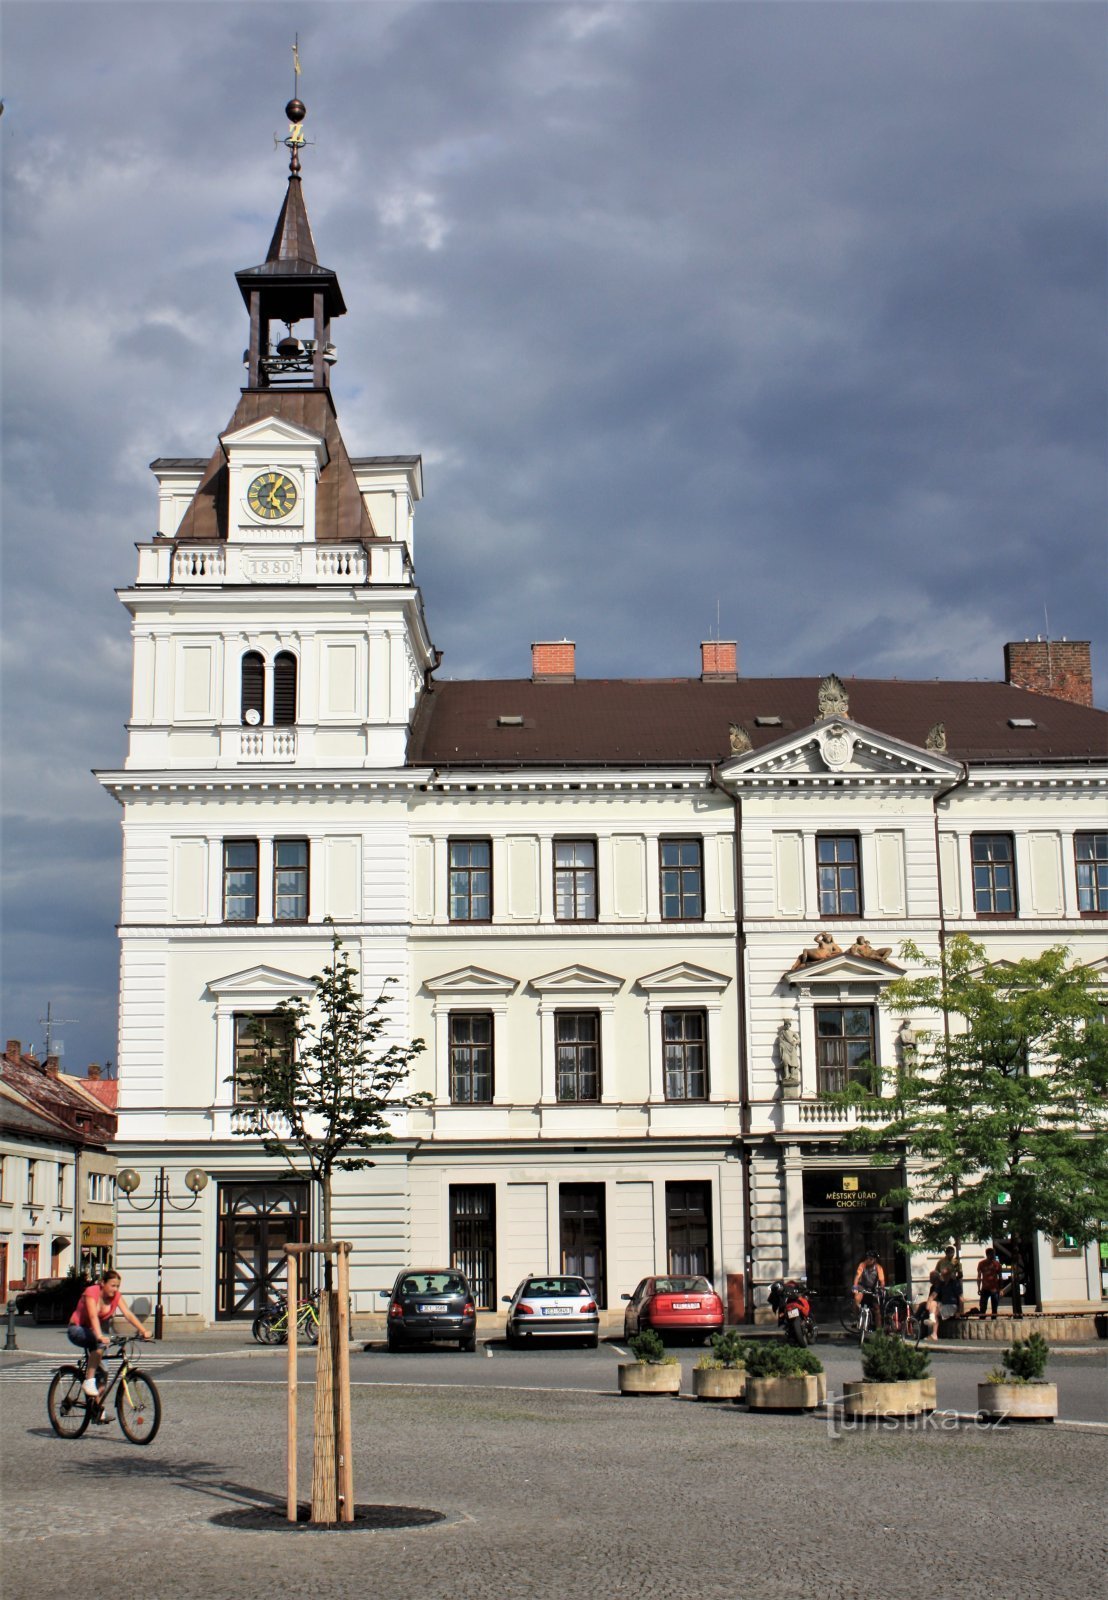 Chocen - town hall